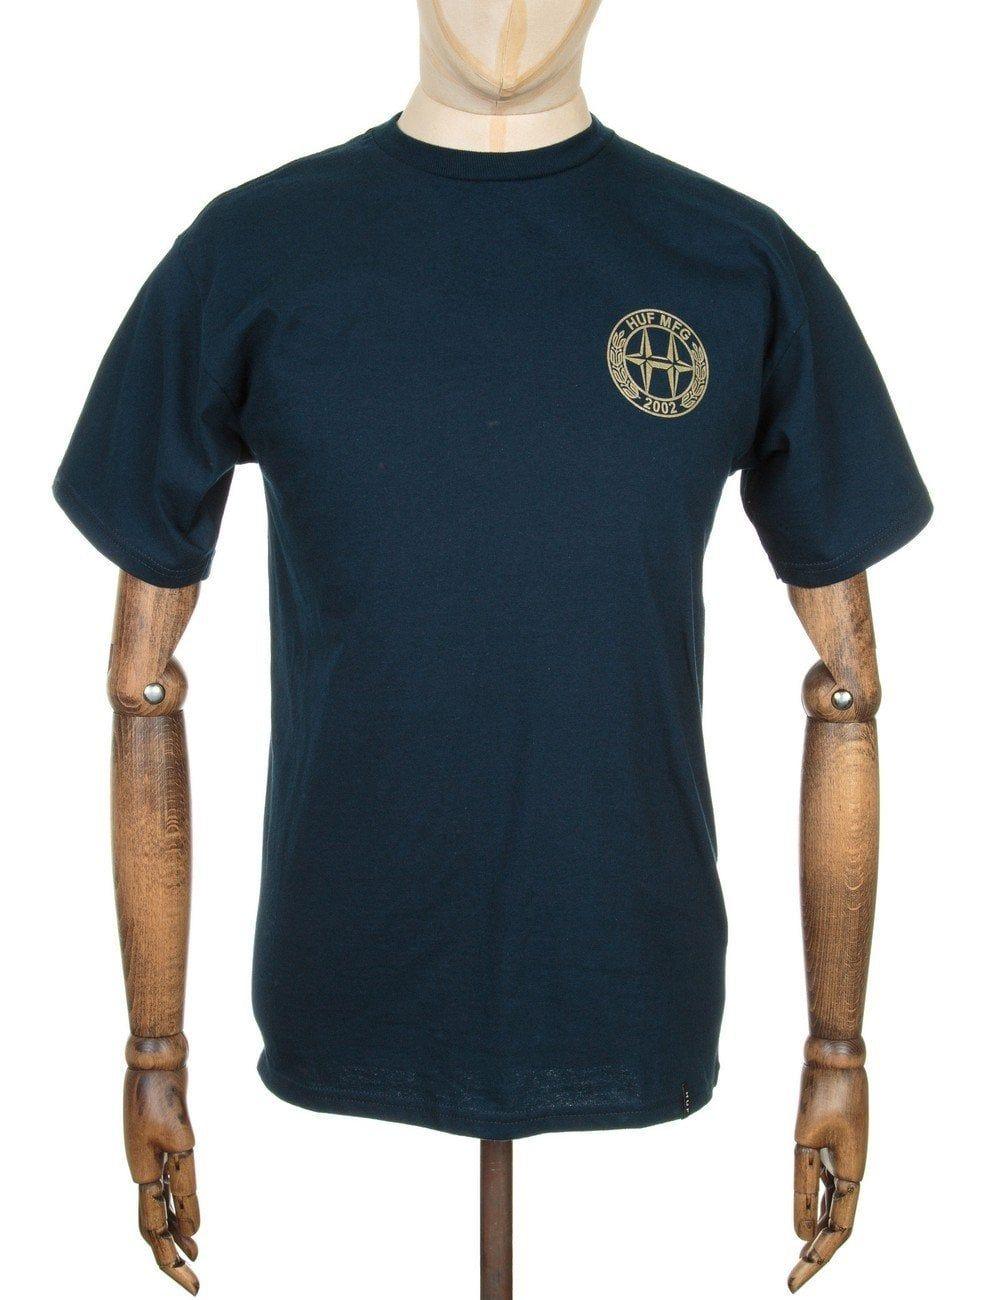 HUF H Logo - Huf H-Class Logo T-shirt - Navy Blue - Clothing from Fat Buddha Store UK